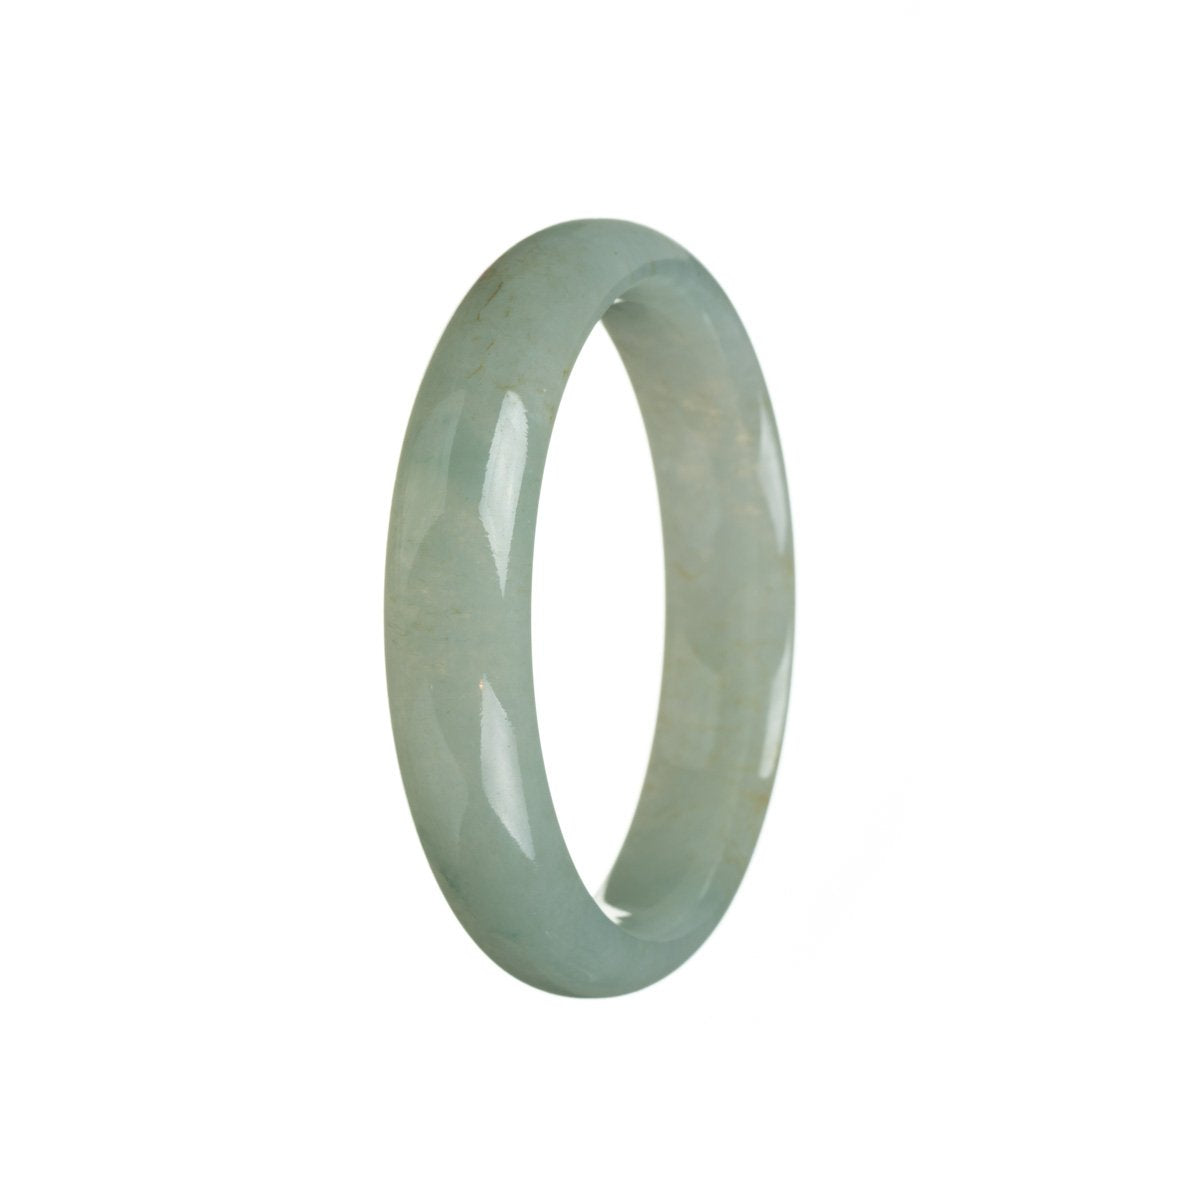 A half moon-shaped bangle bracelet made of genuine untreated green Burma jade, measuring 56mm. Designed by MAYS.